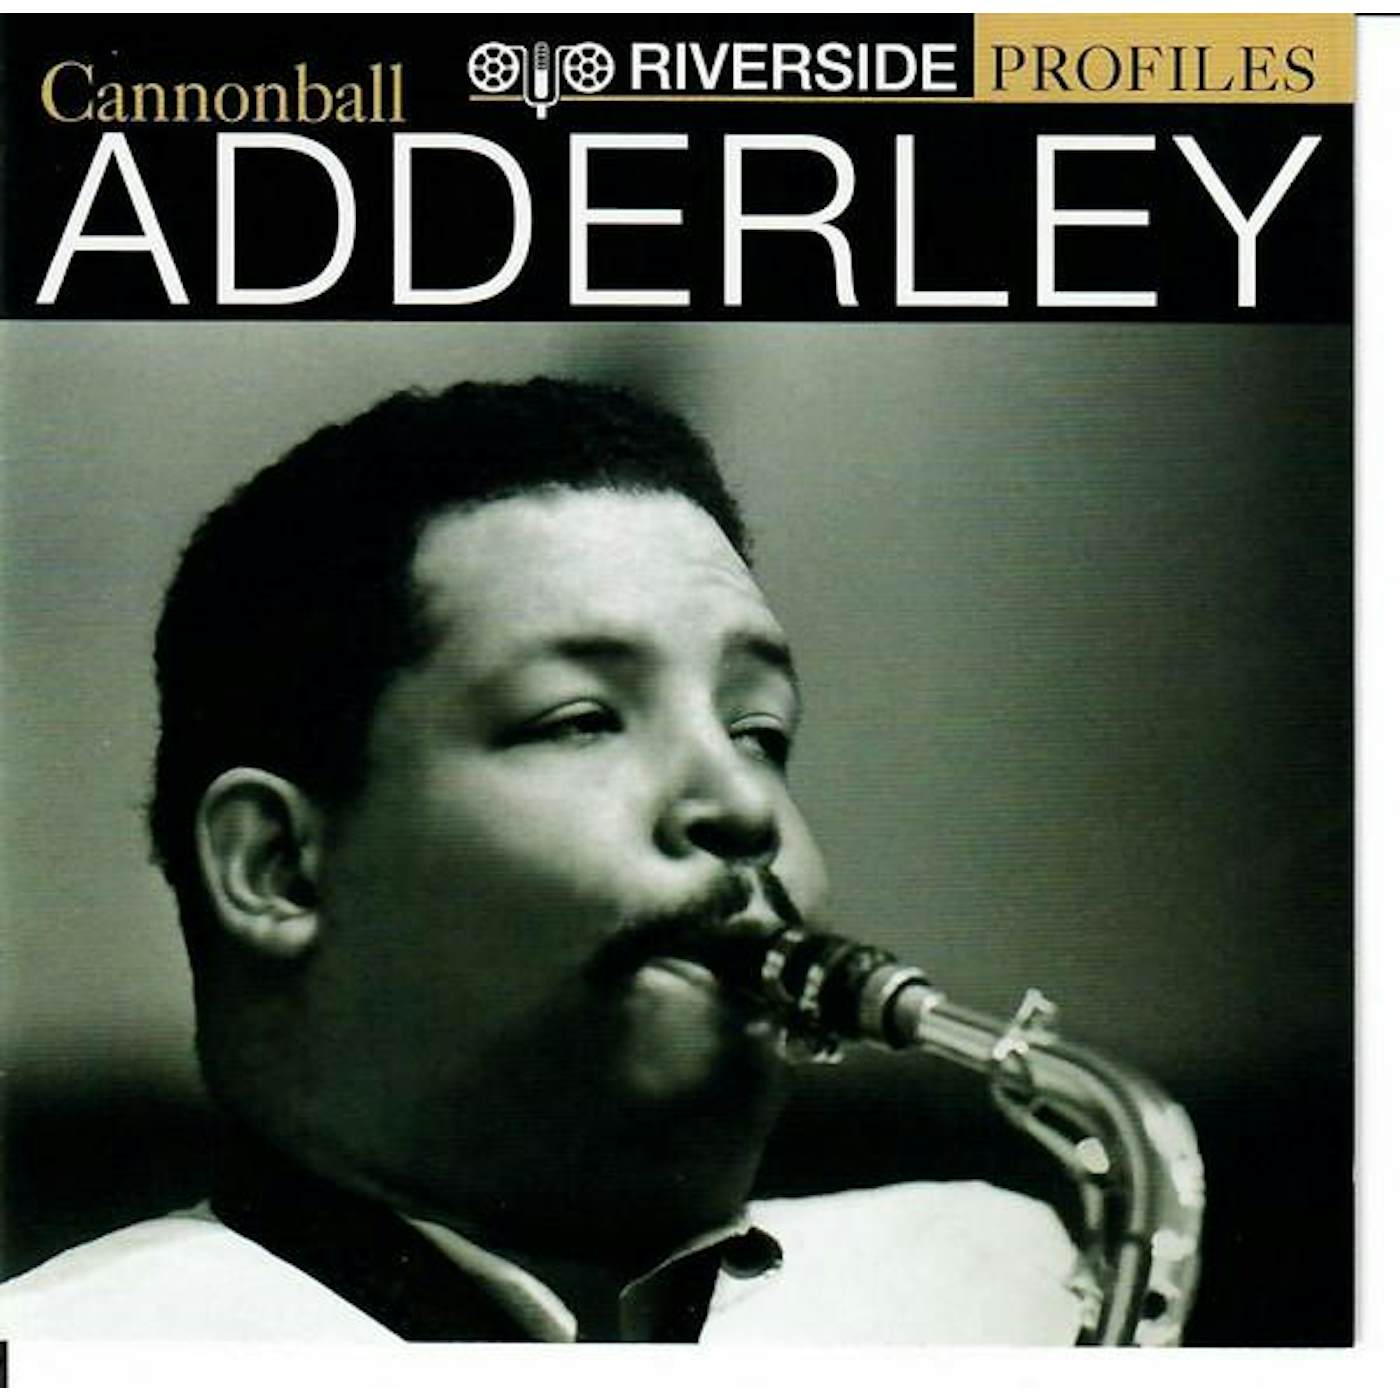 Cannonball Adderley RIVERSIDE PROFILES CD